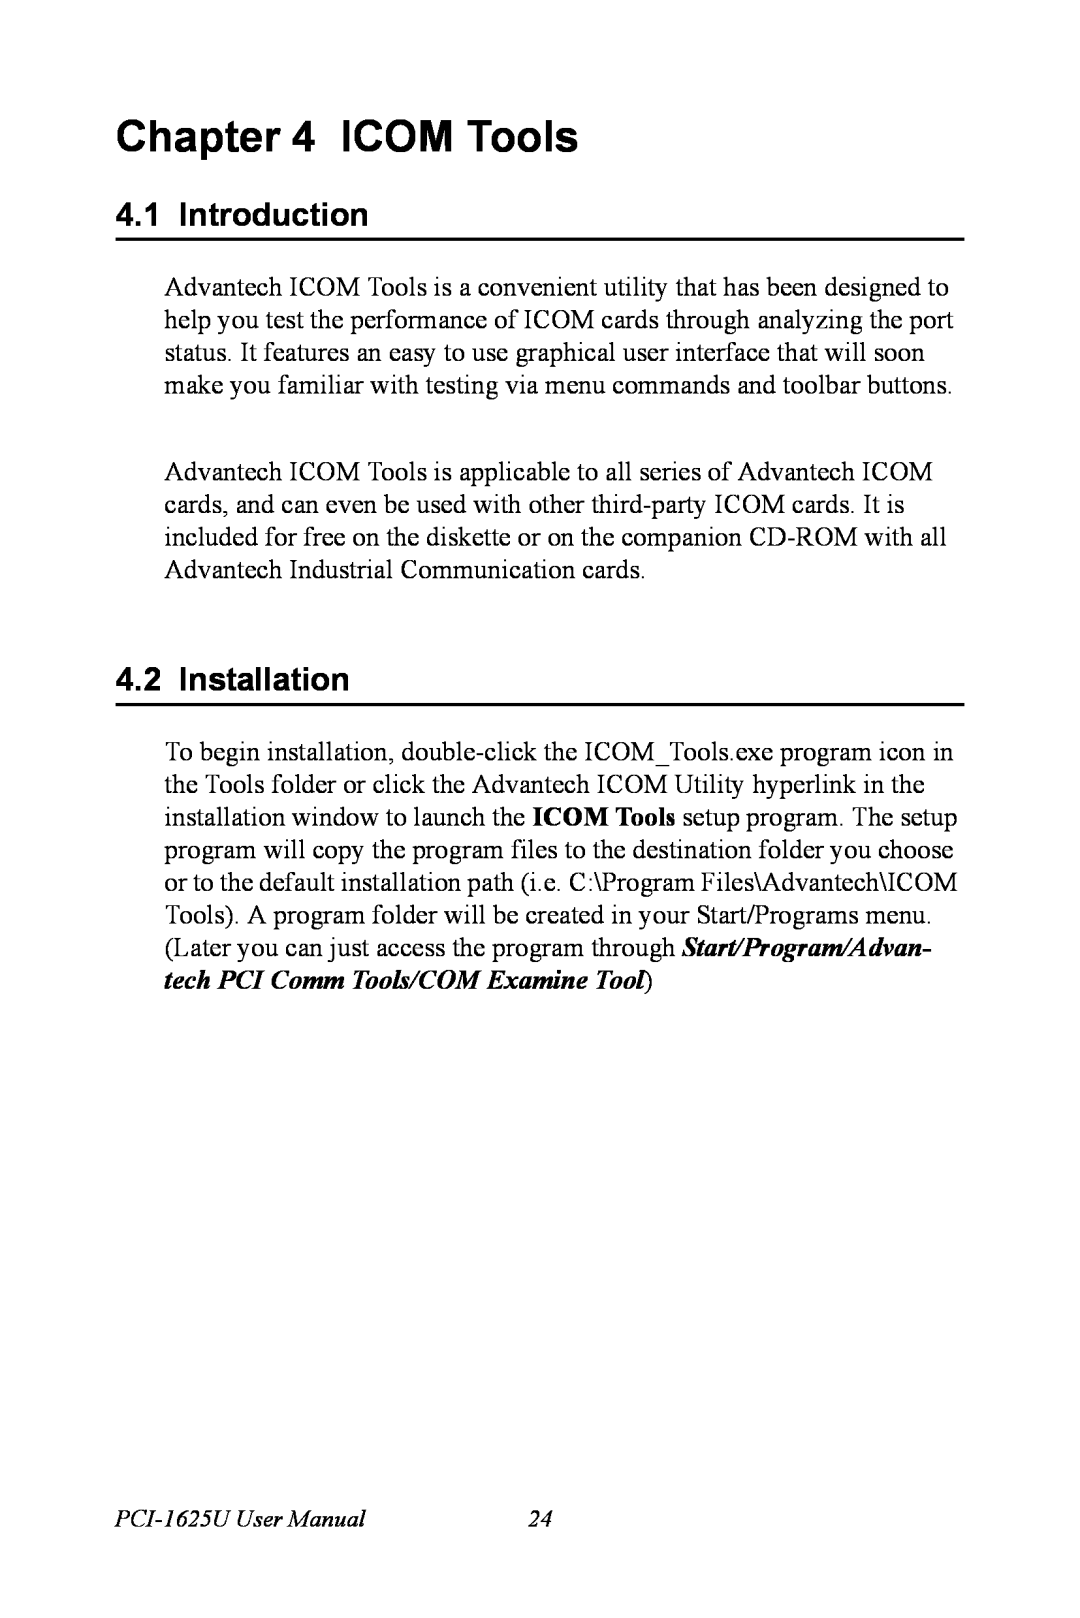 Advantech PCI-1625U user manual ICOM Tools, Introduction, Installation 